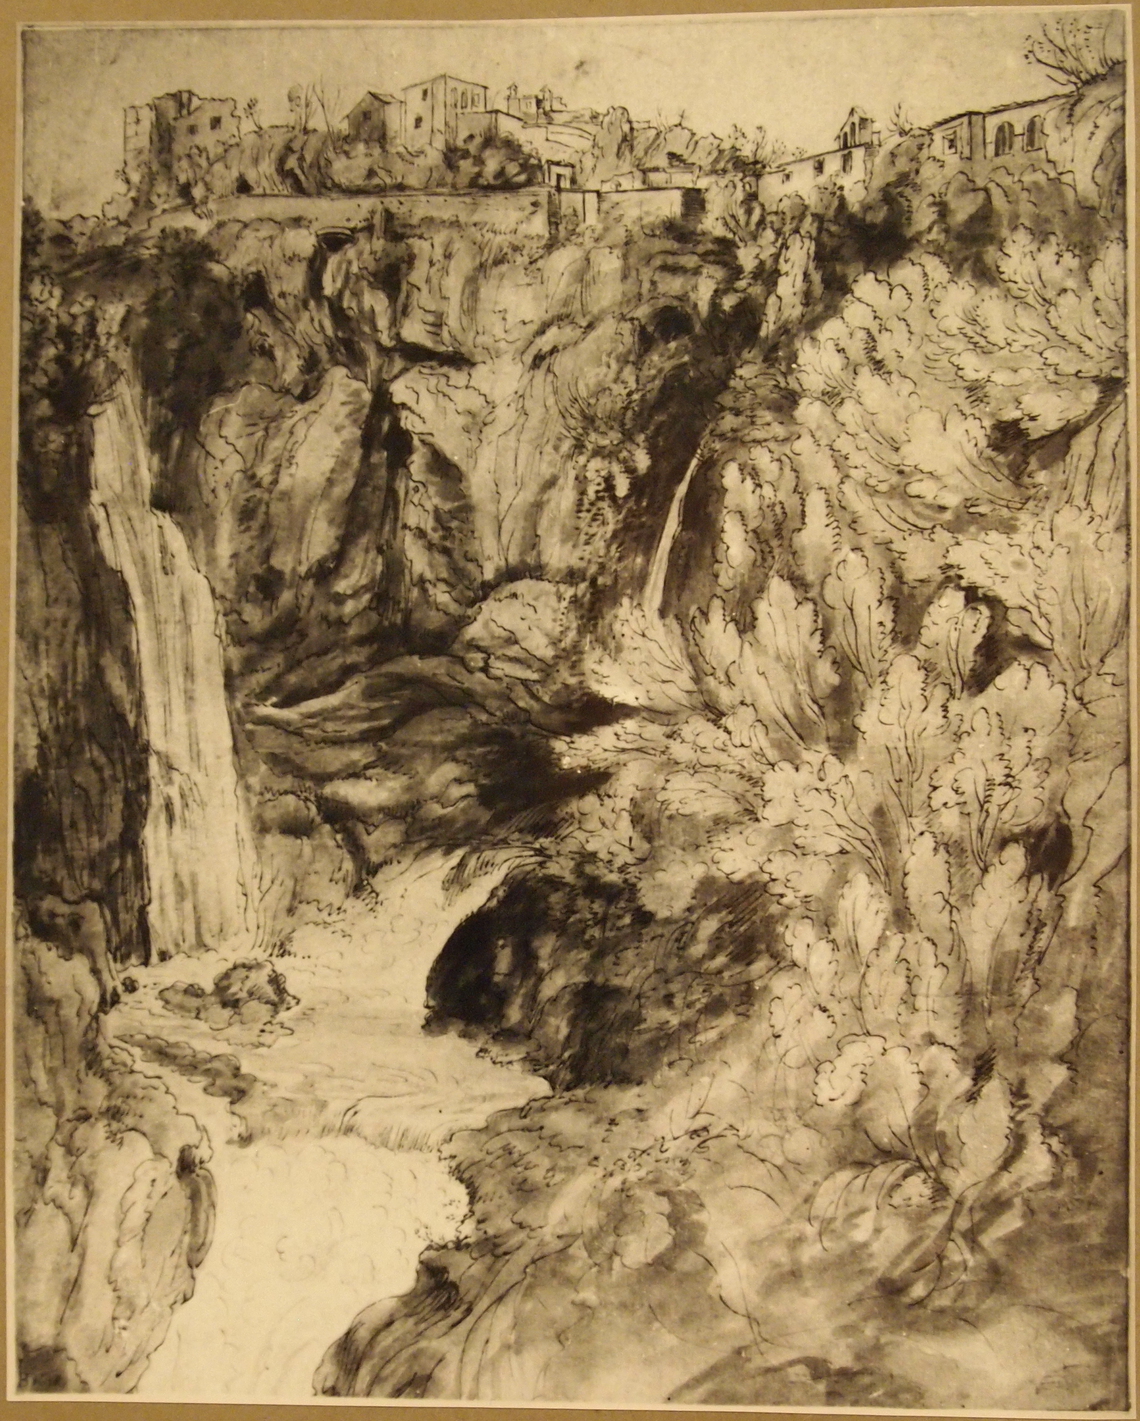 Waterfall at Tivoli